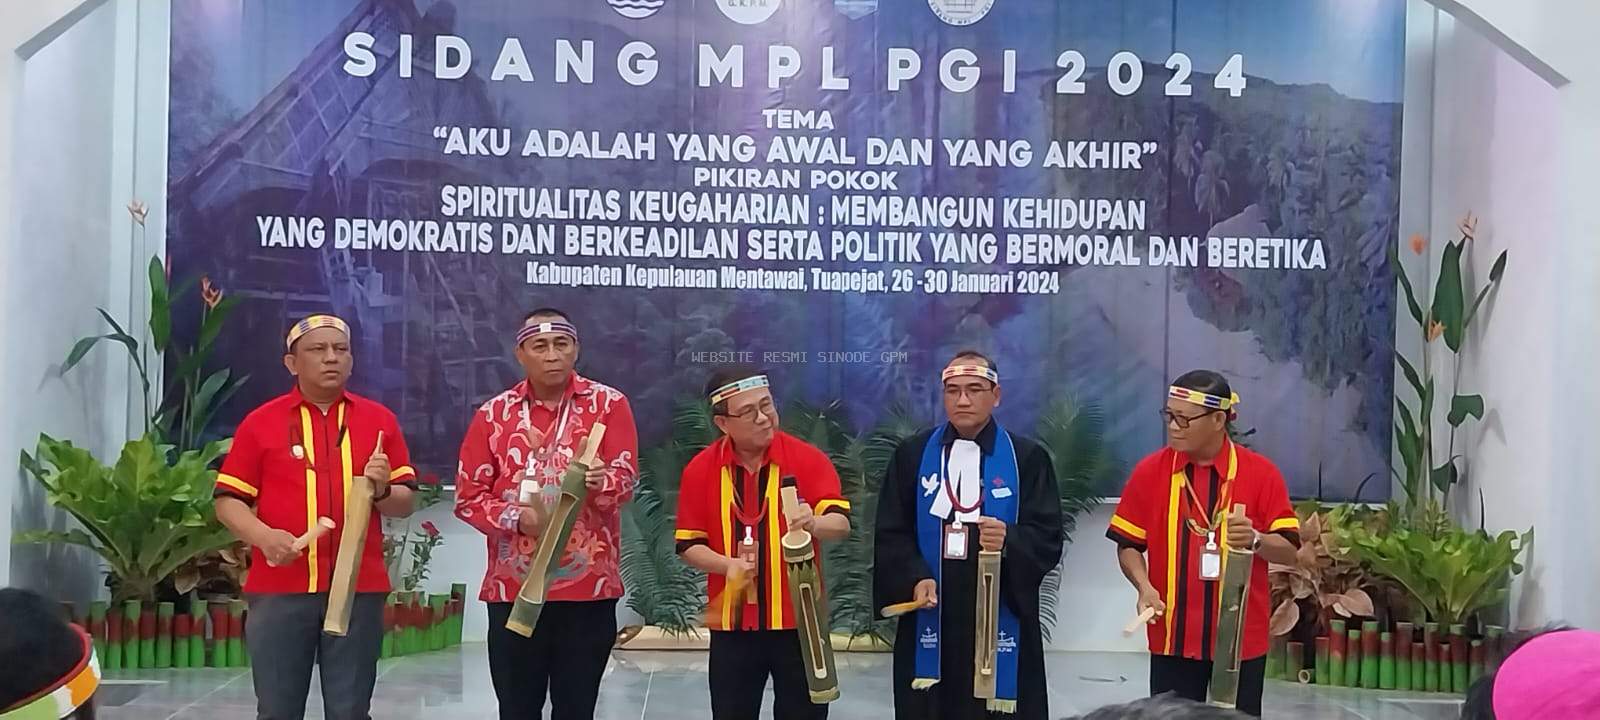 Sidang MPL PGI 2024 Di Mentawai Soroti Isu Pembangunan Dan Kehidupan Demokrasi